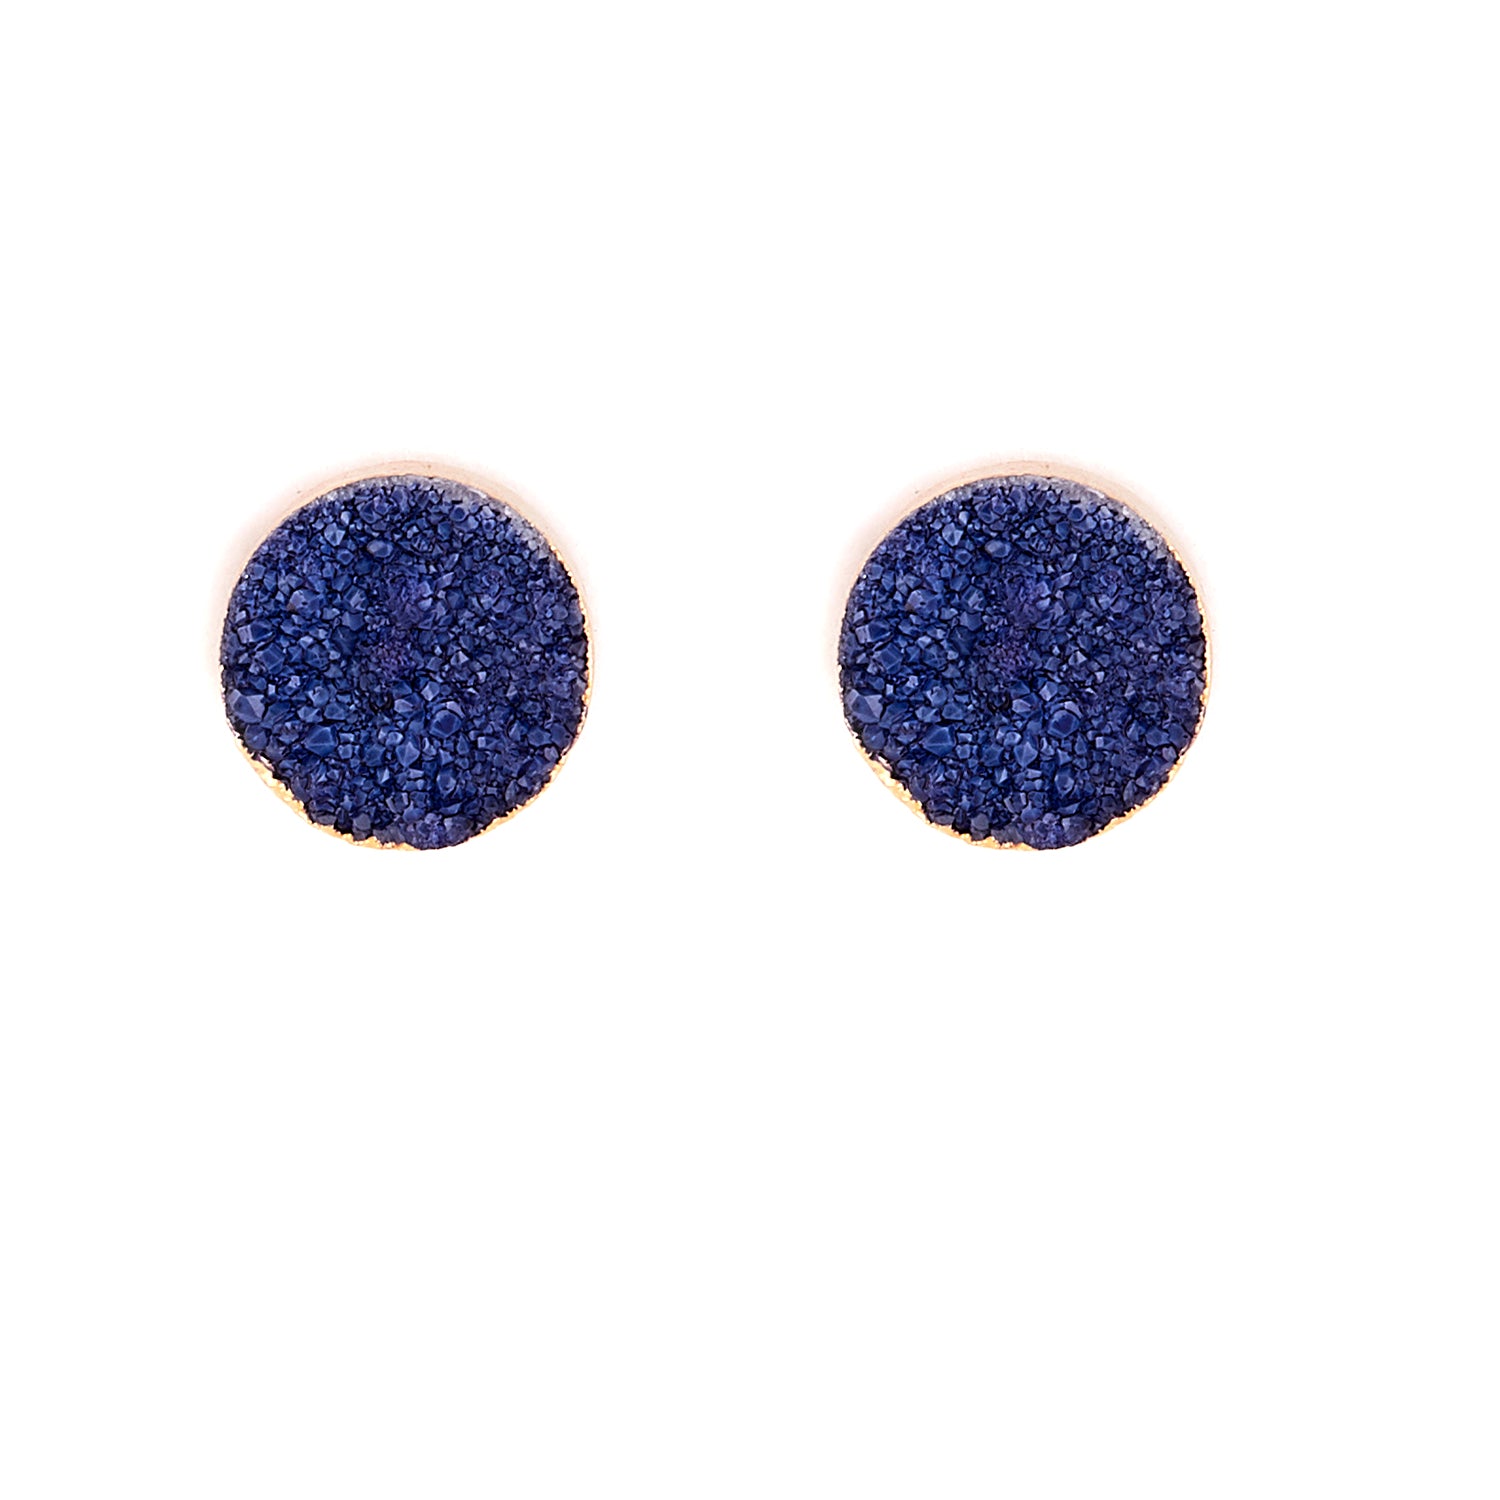 Blue Hydro Stud Earring Earring 13.99 Indigo Paisley